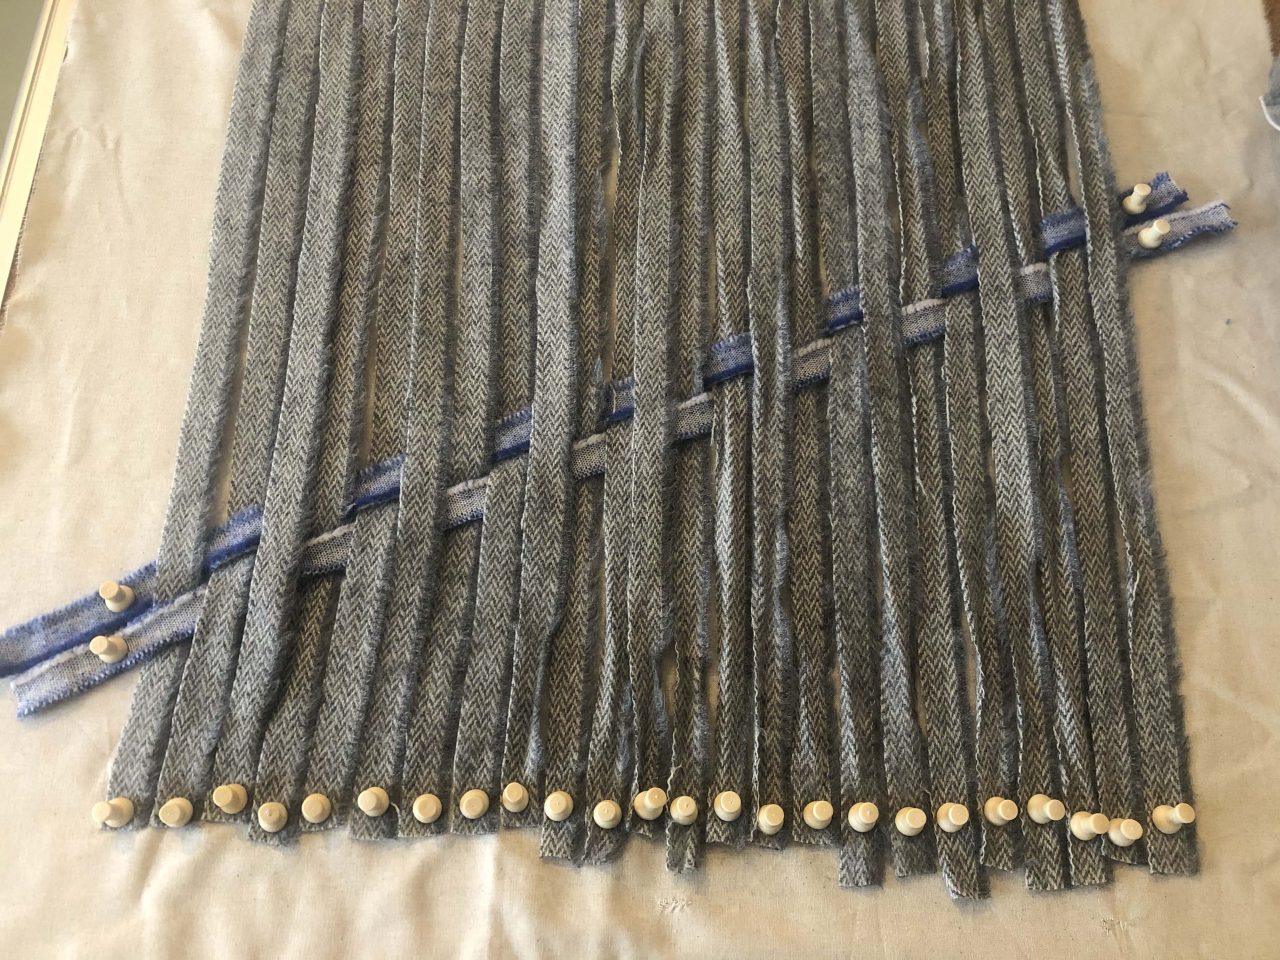 Ragged Life Blog  Ribbon Weaving with Blanket Yarn - Ragged Life Blog